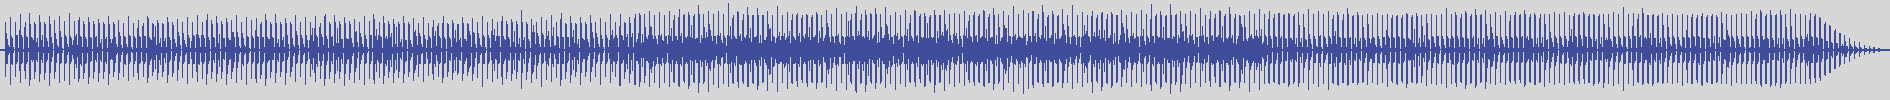 atomic_recordings [AR006] Kyle Fenton - Once Again [Lorentz Goga's House Mix] audio wave form